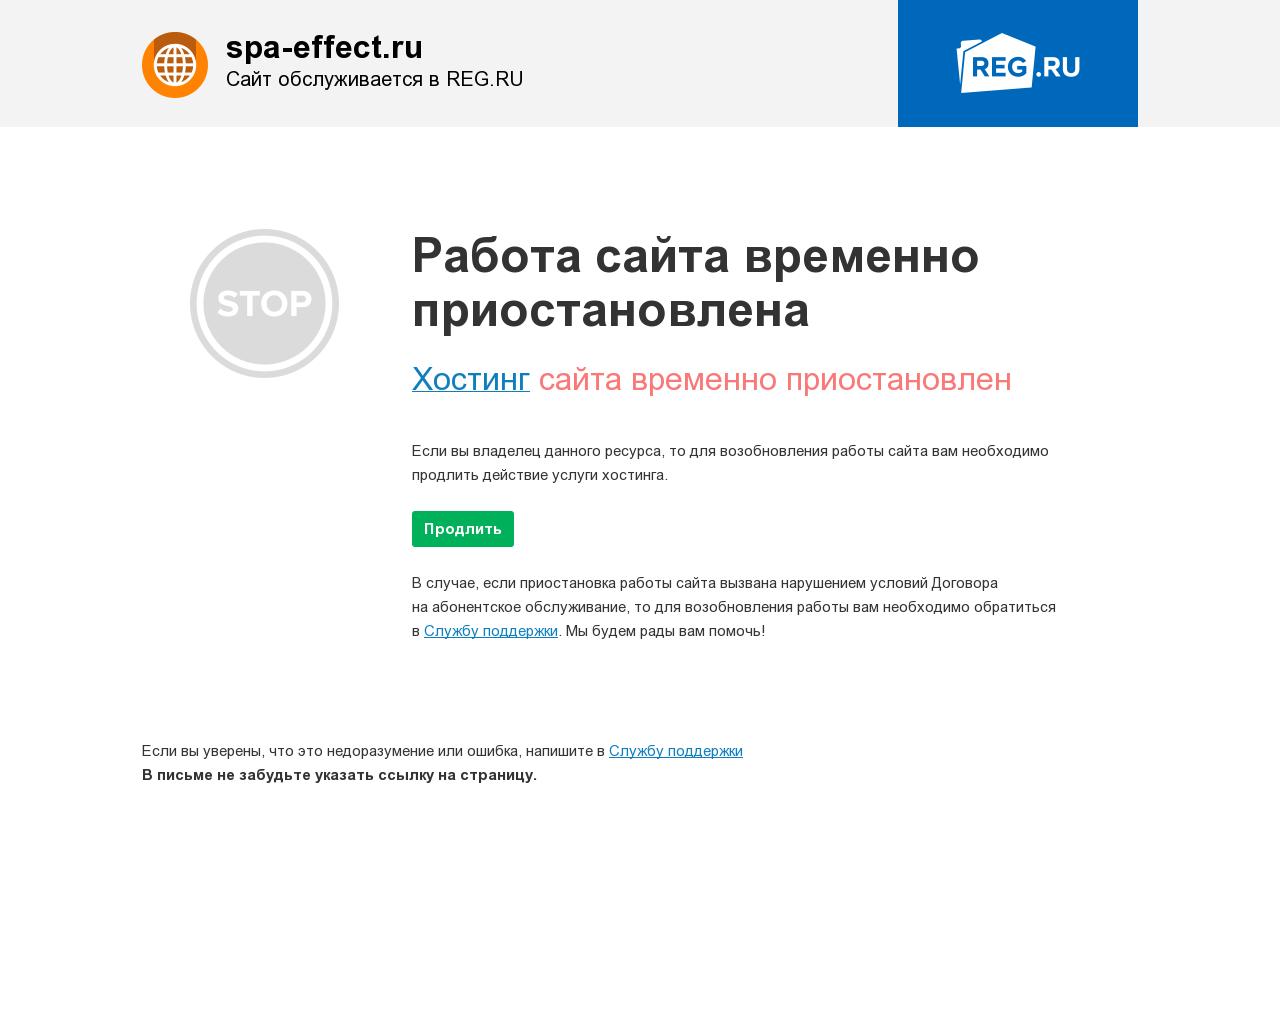 Изображение сайта spa-effect.ru в разрешении 1280x1024